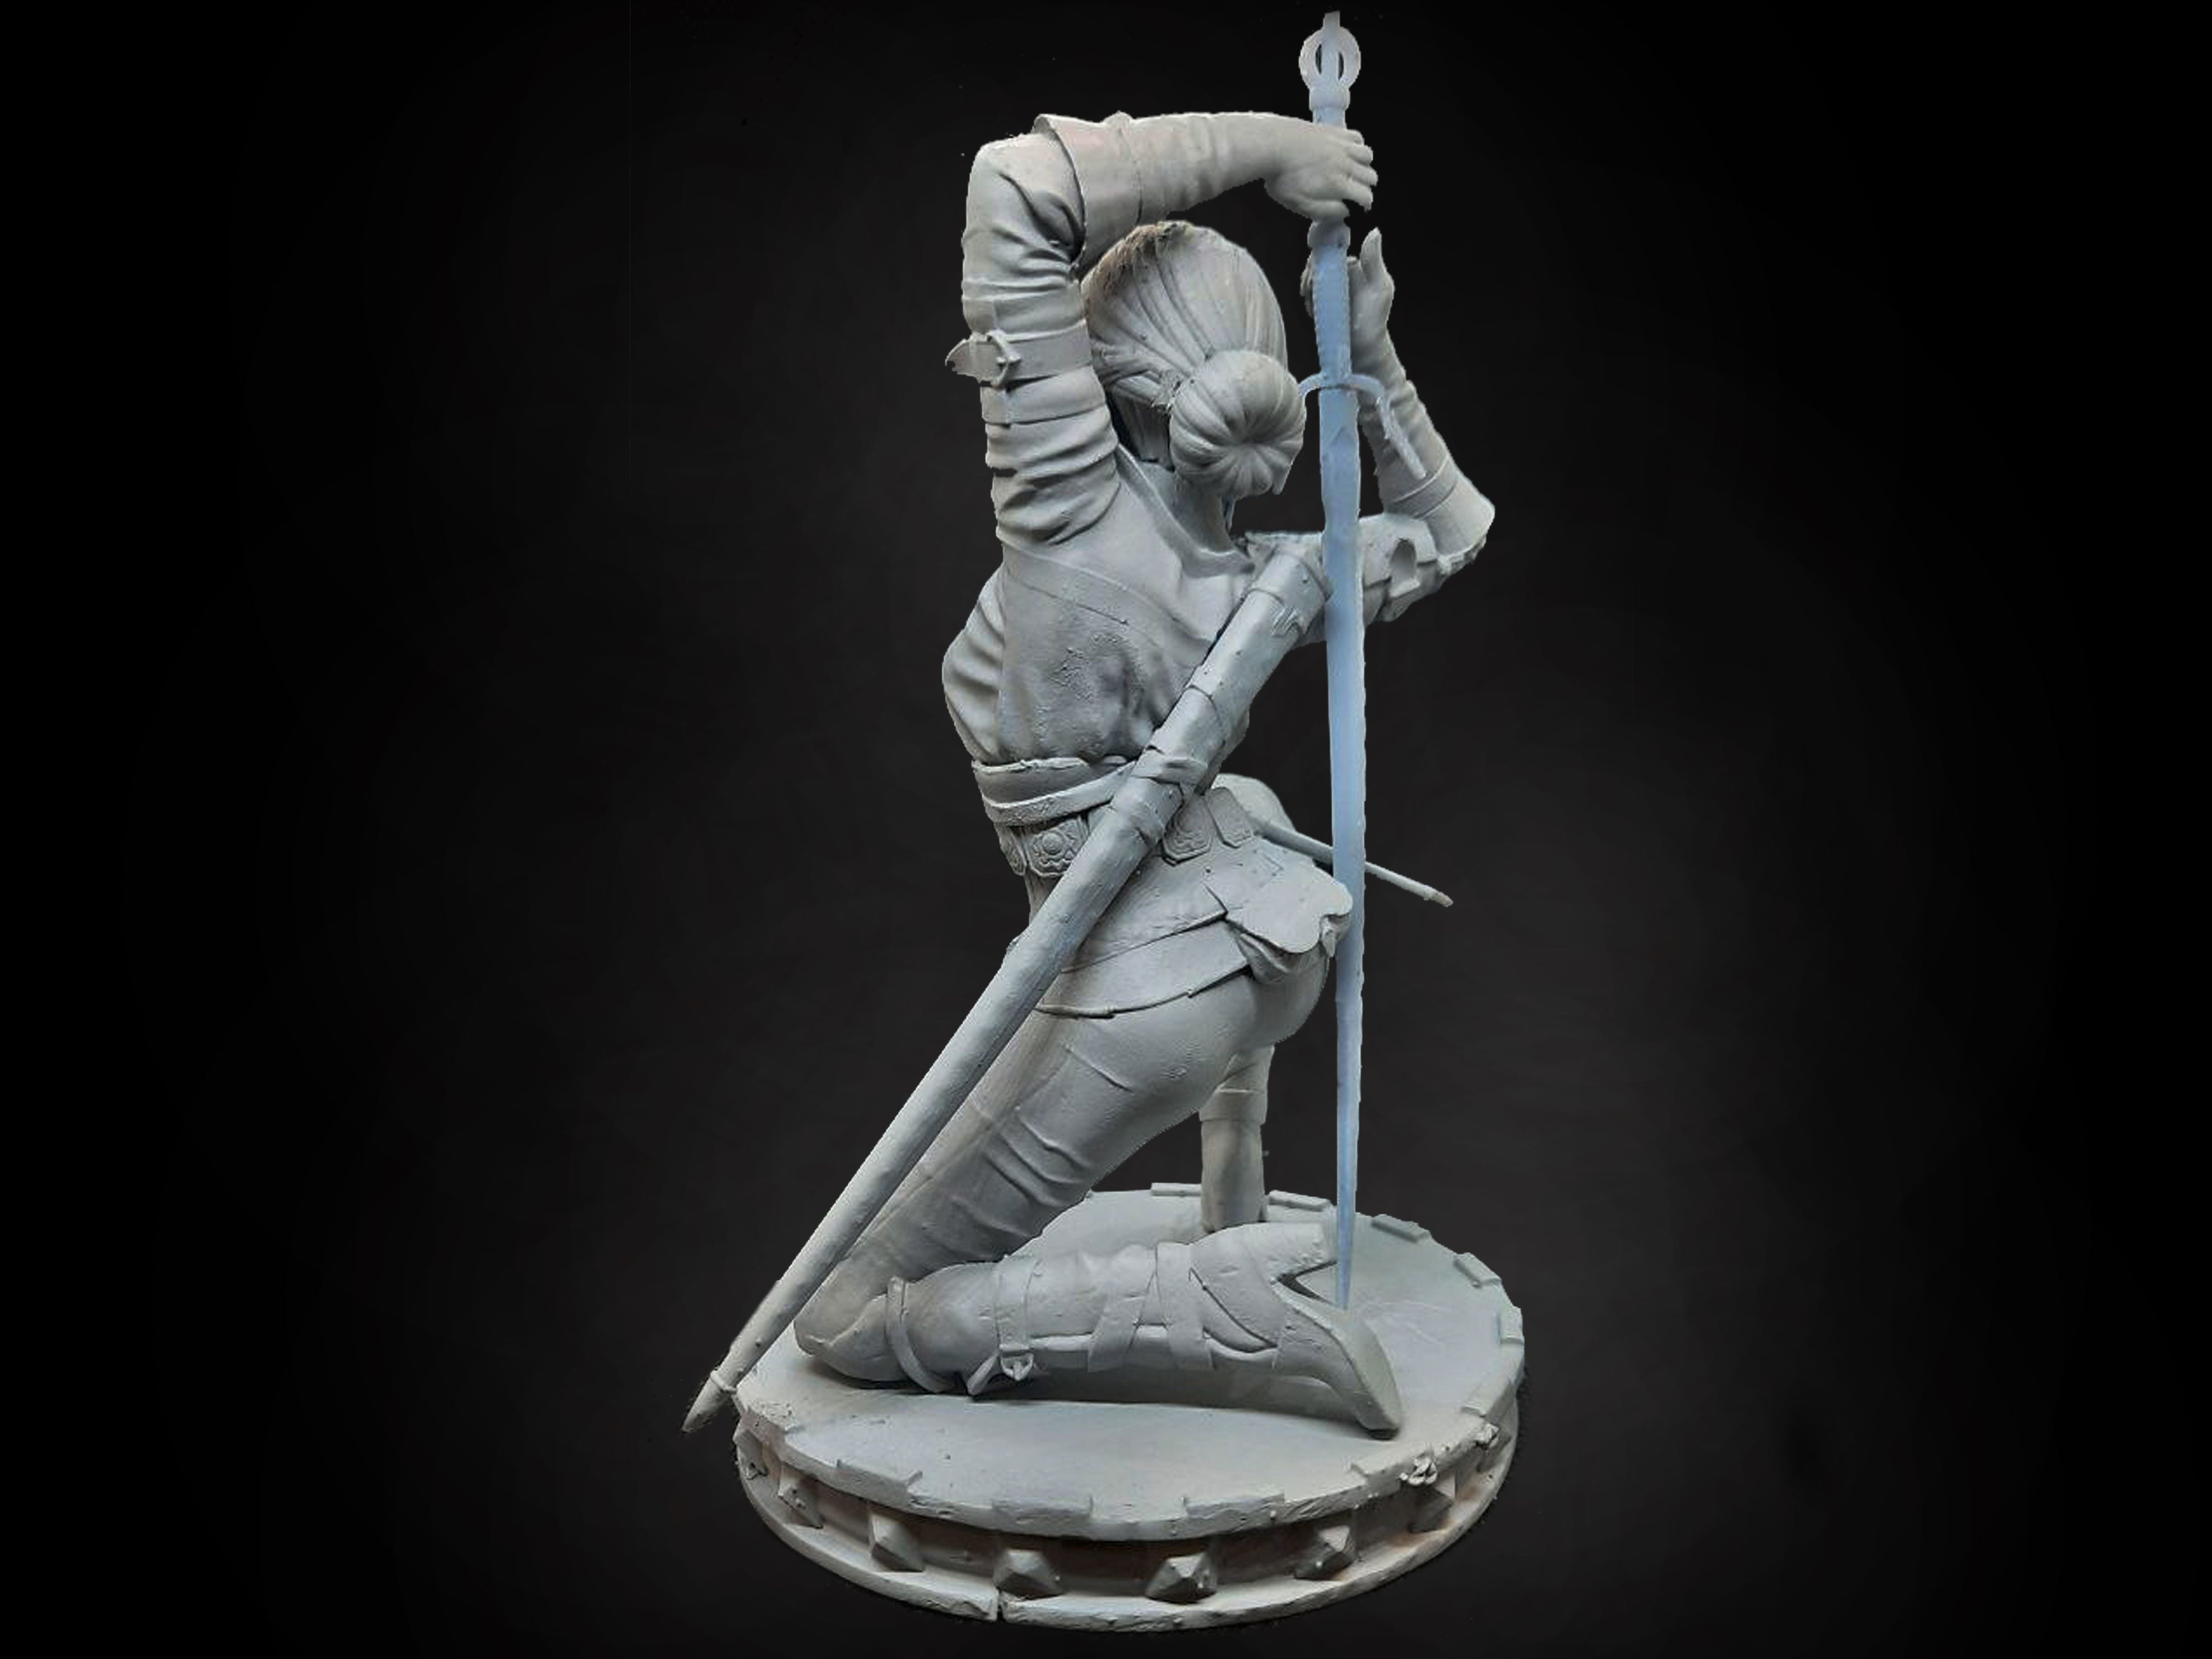 Ciri the Witcher 3D Print model - Fan Art, SFW/NSFW 75mm or 180mm